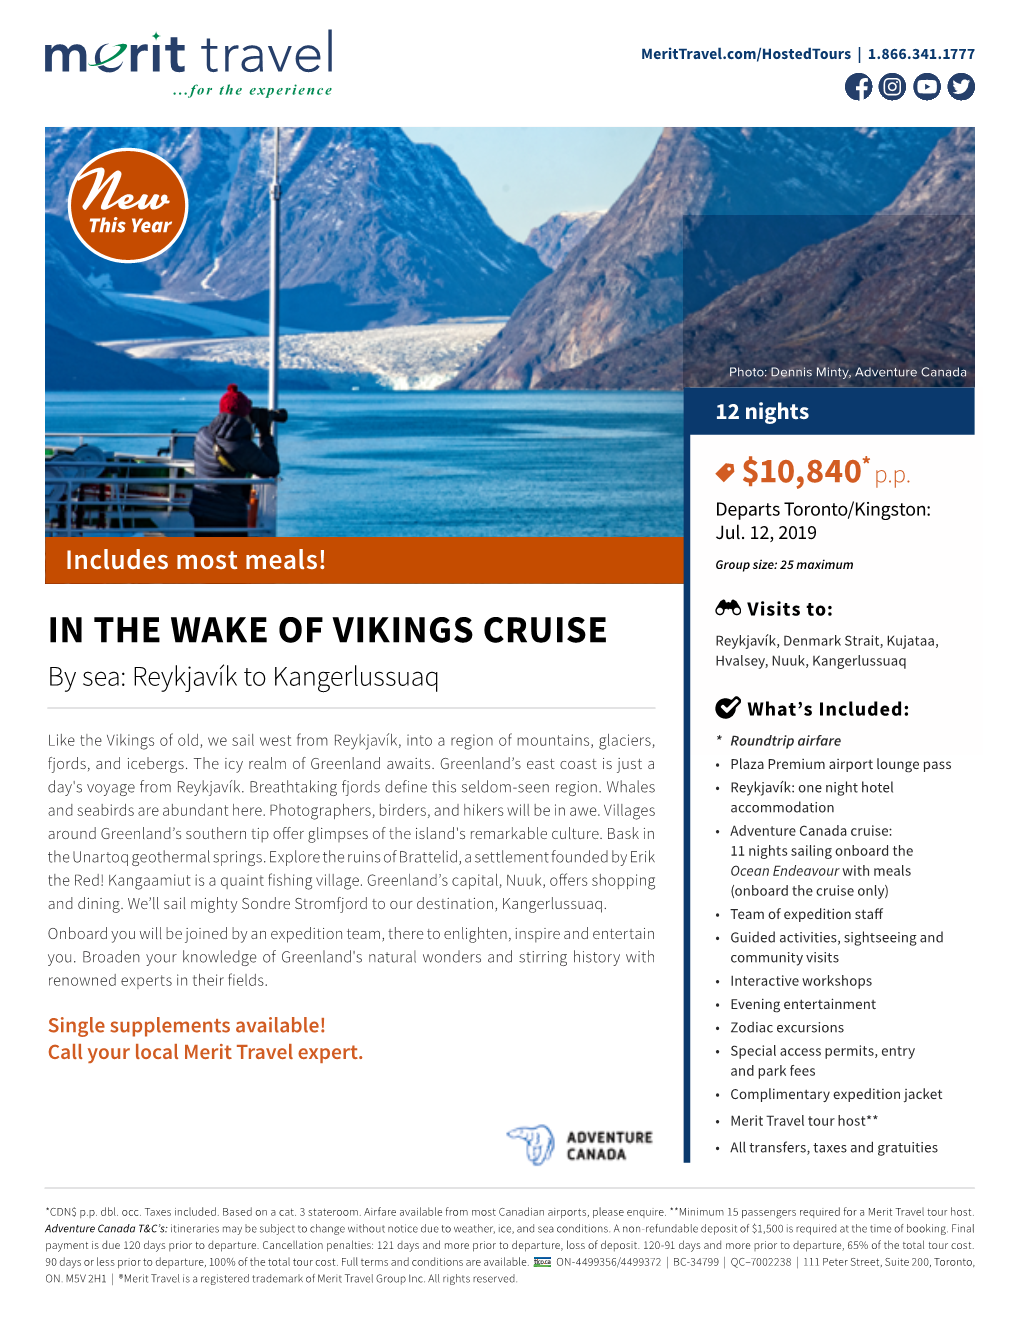 In the Wake of Vikings Cruise